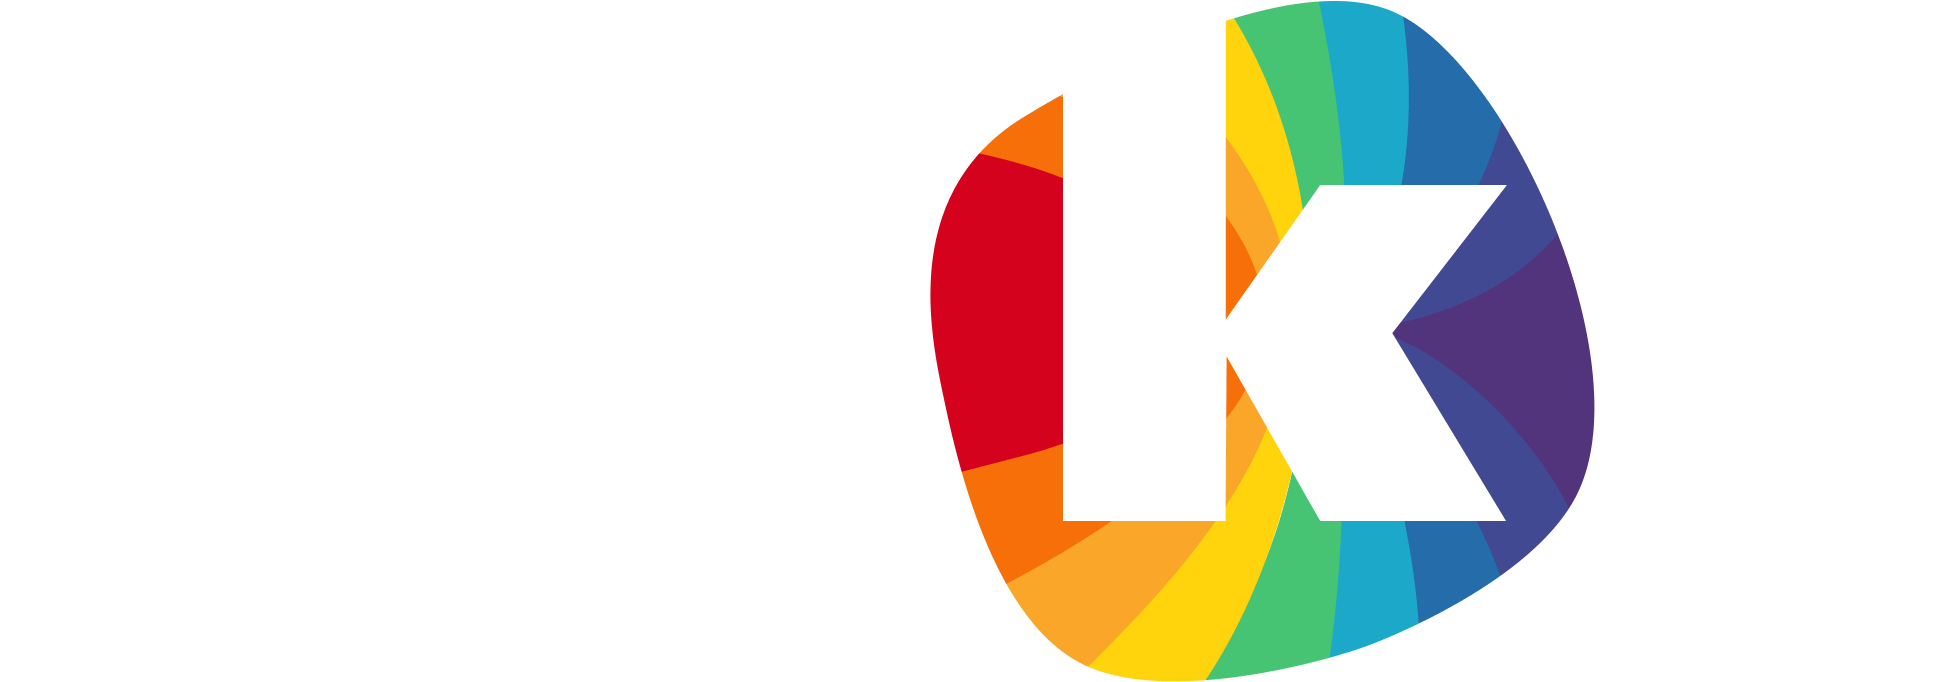 Logo Mako White Trimmed Compressed